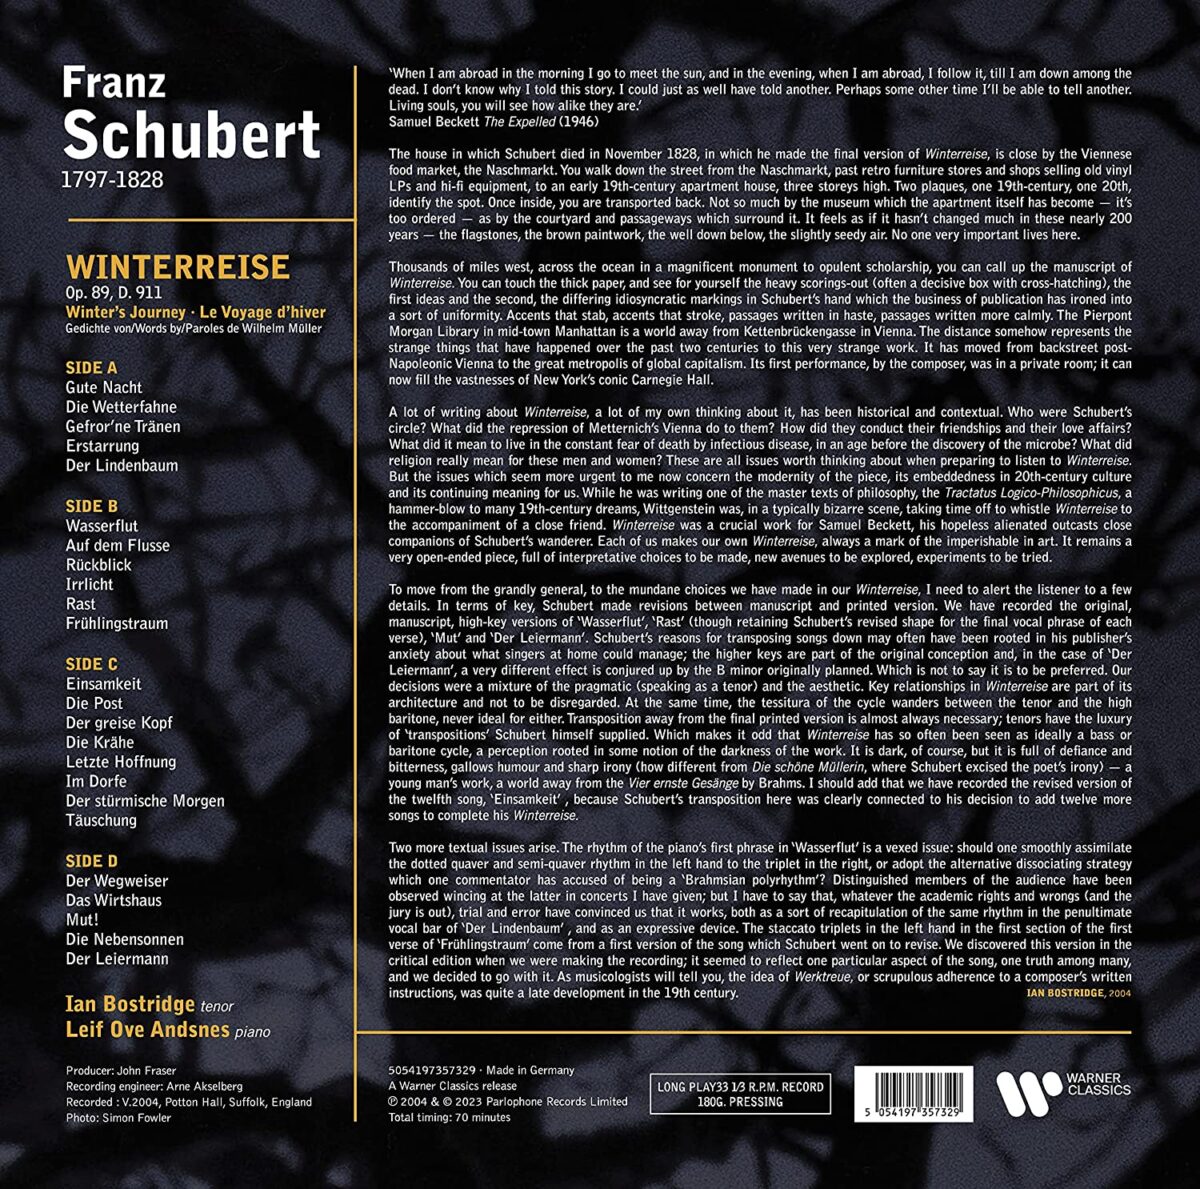 Ian Bostridge / Leif Ove Andsnes 슈베르트: 겨울 나그네 (Schubert: Winterreise) [2LP]